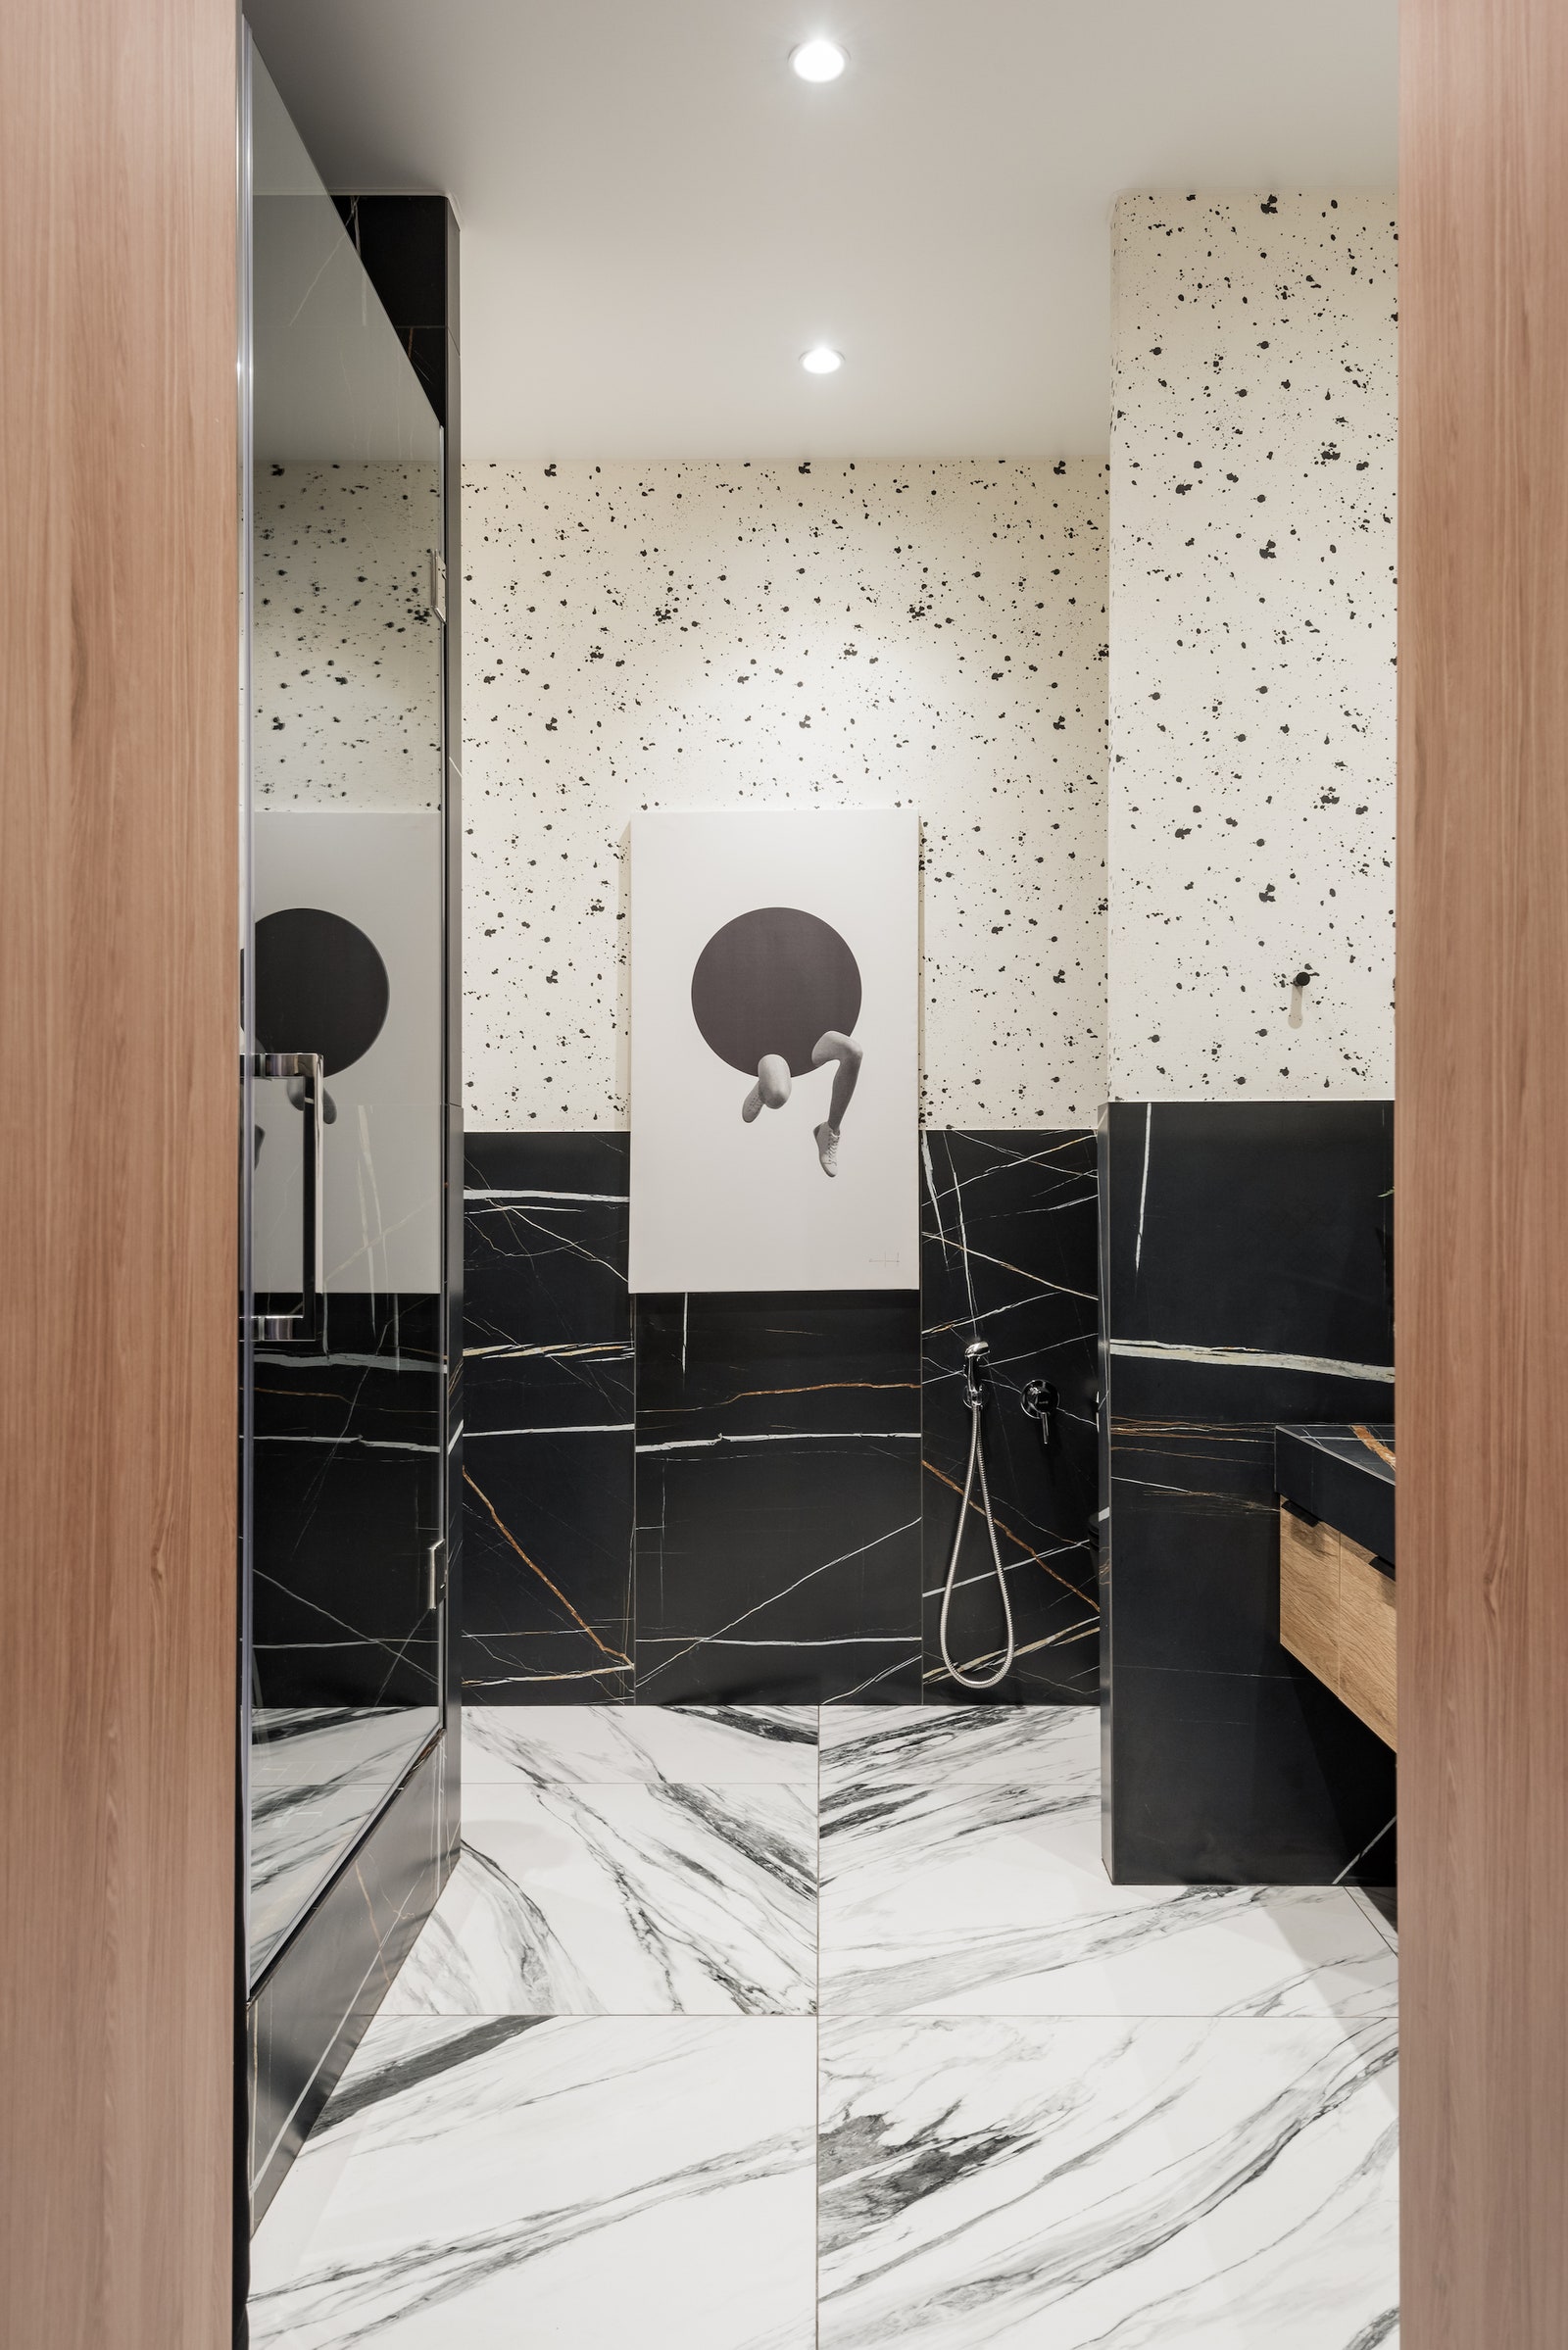 Фрагмент ванной комнаты. На стене работа иллюстратора Ludwig H. Hofmann.